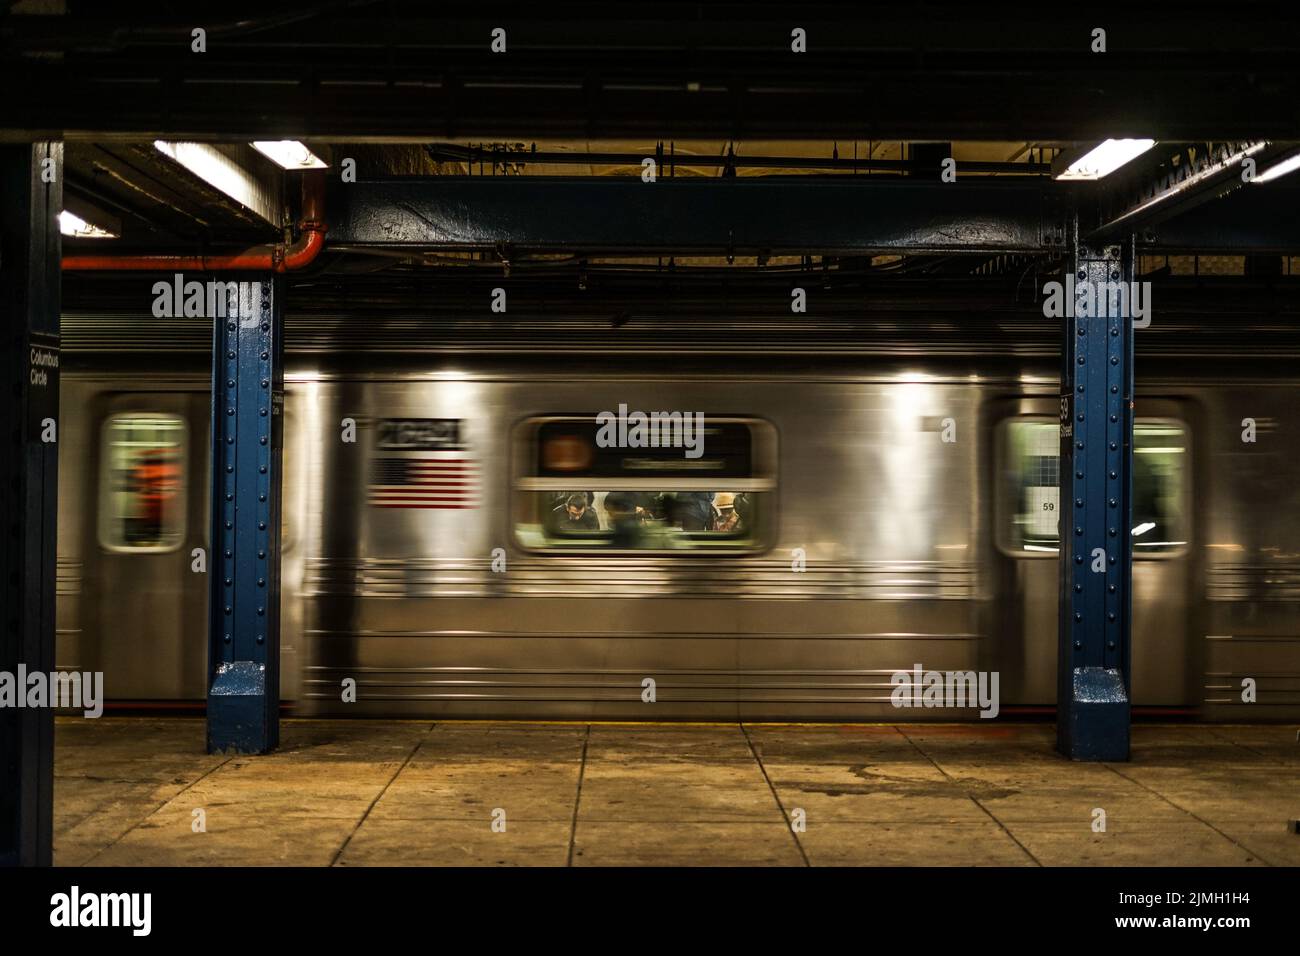 New York subway image Stock Photo